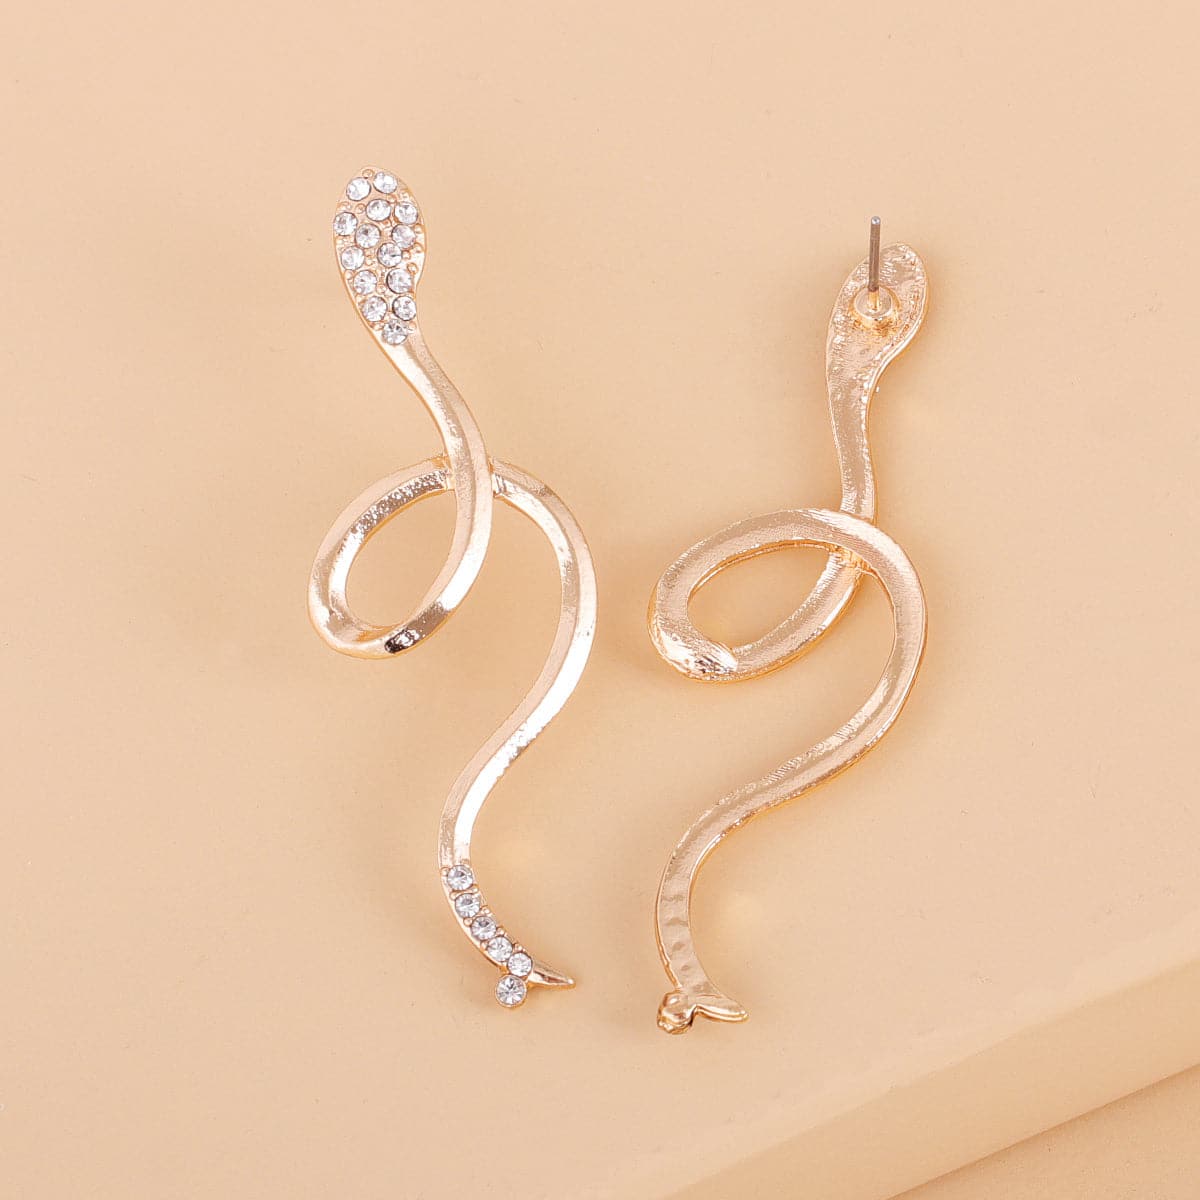 Cubic Zirconia & 18K Gold-Plated Snake Drop Earrings